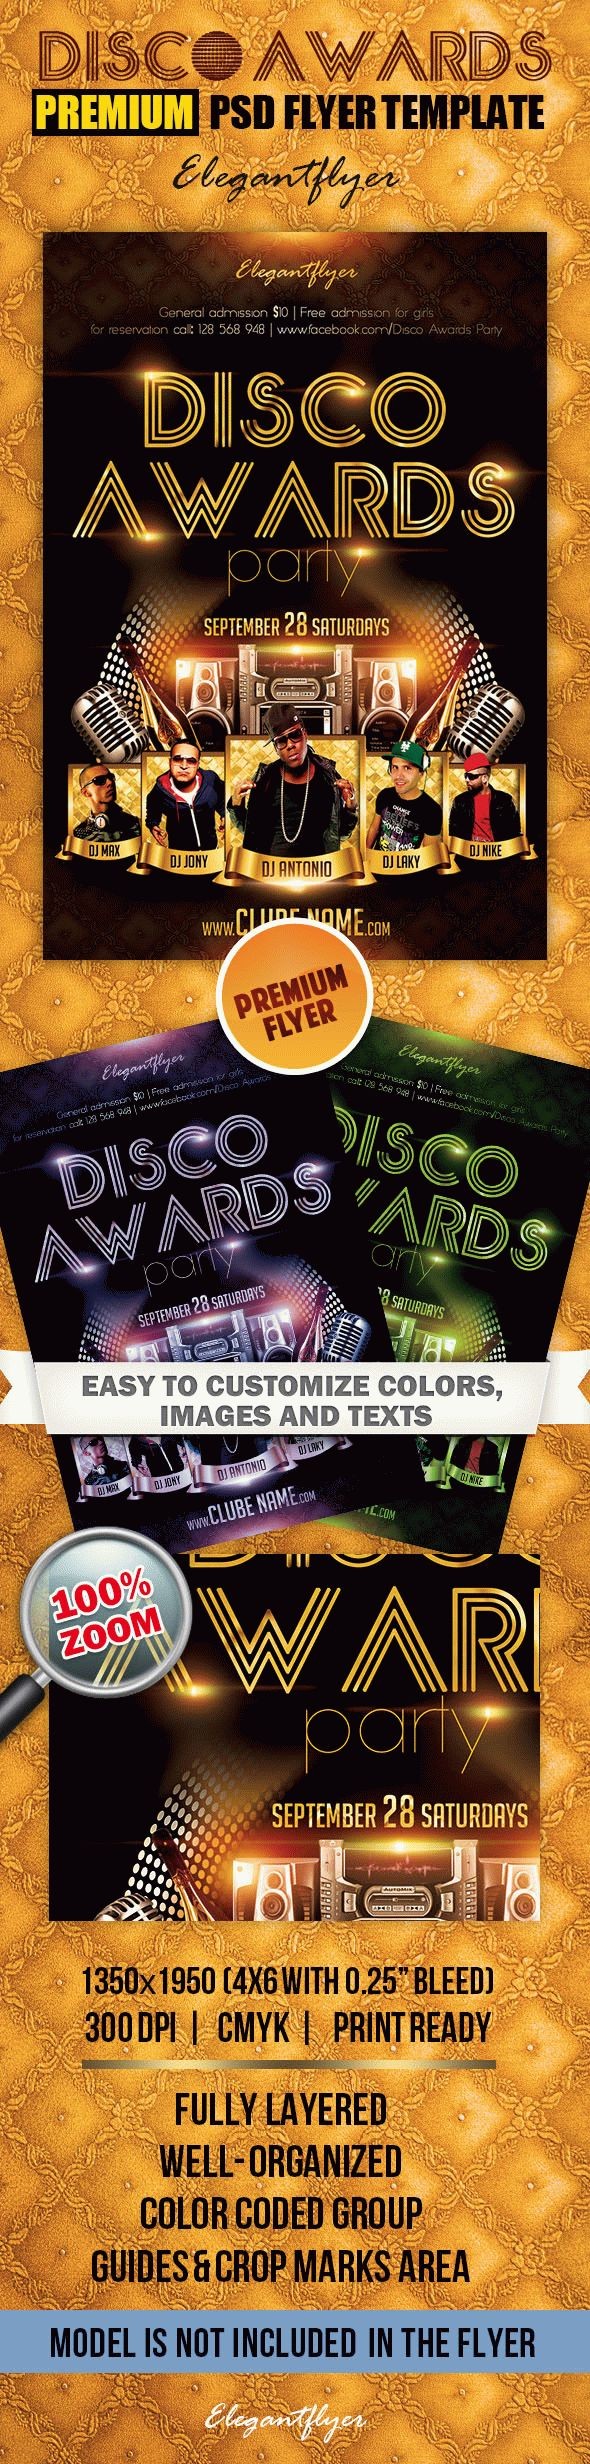 Disco Awards Party by ElegantFlyer